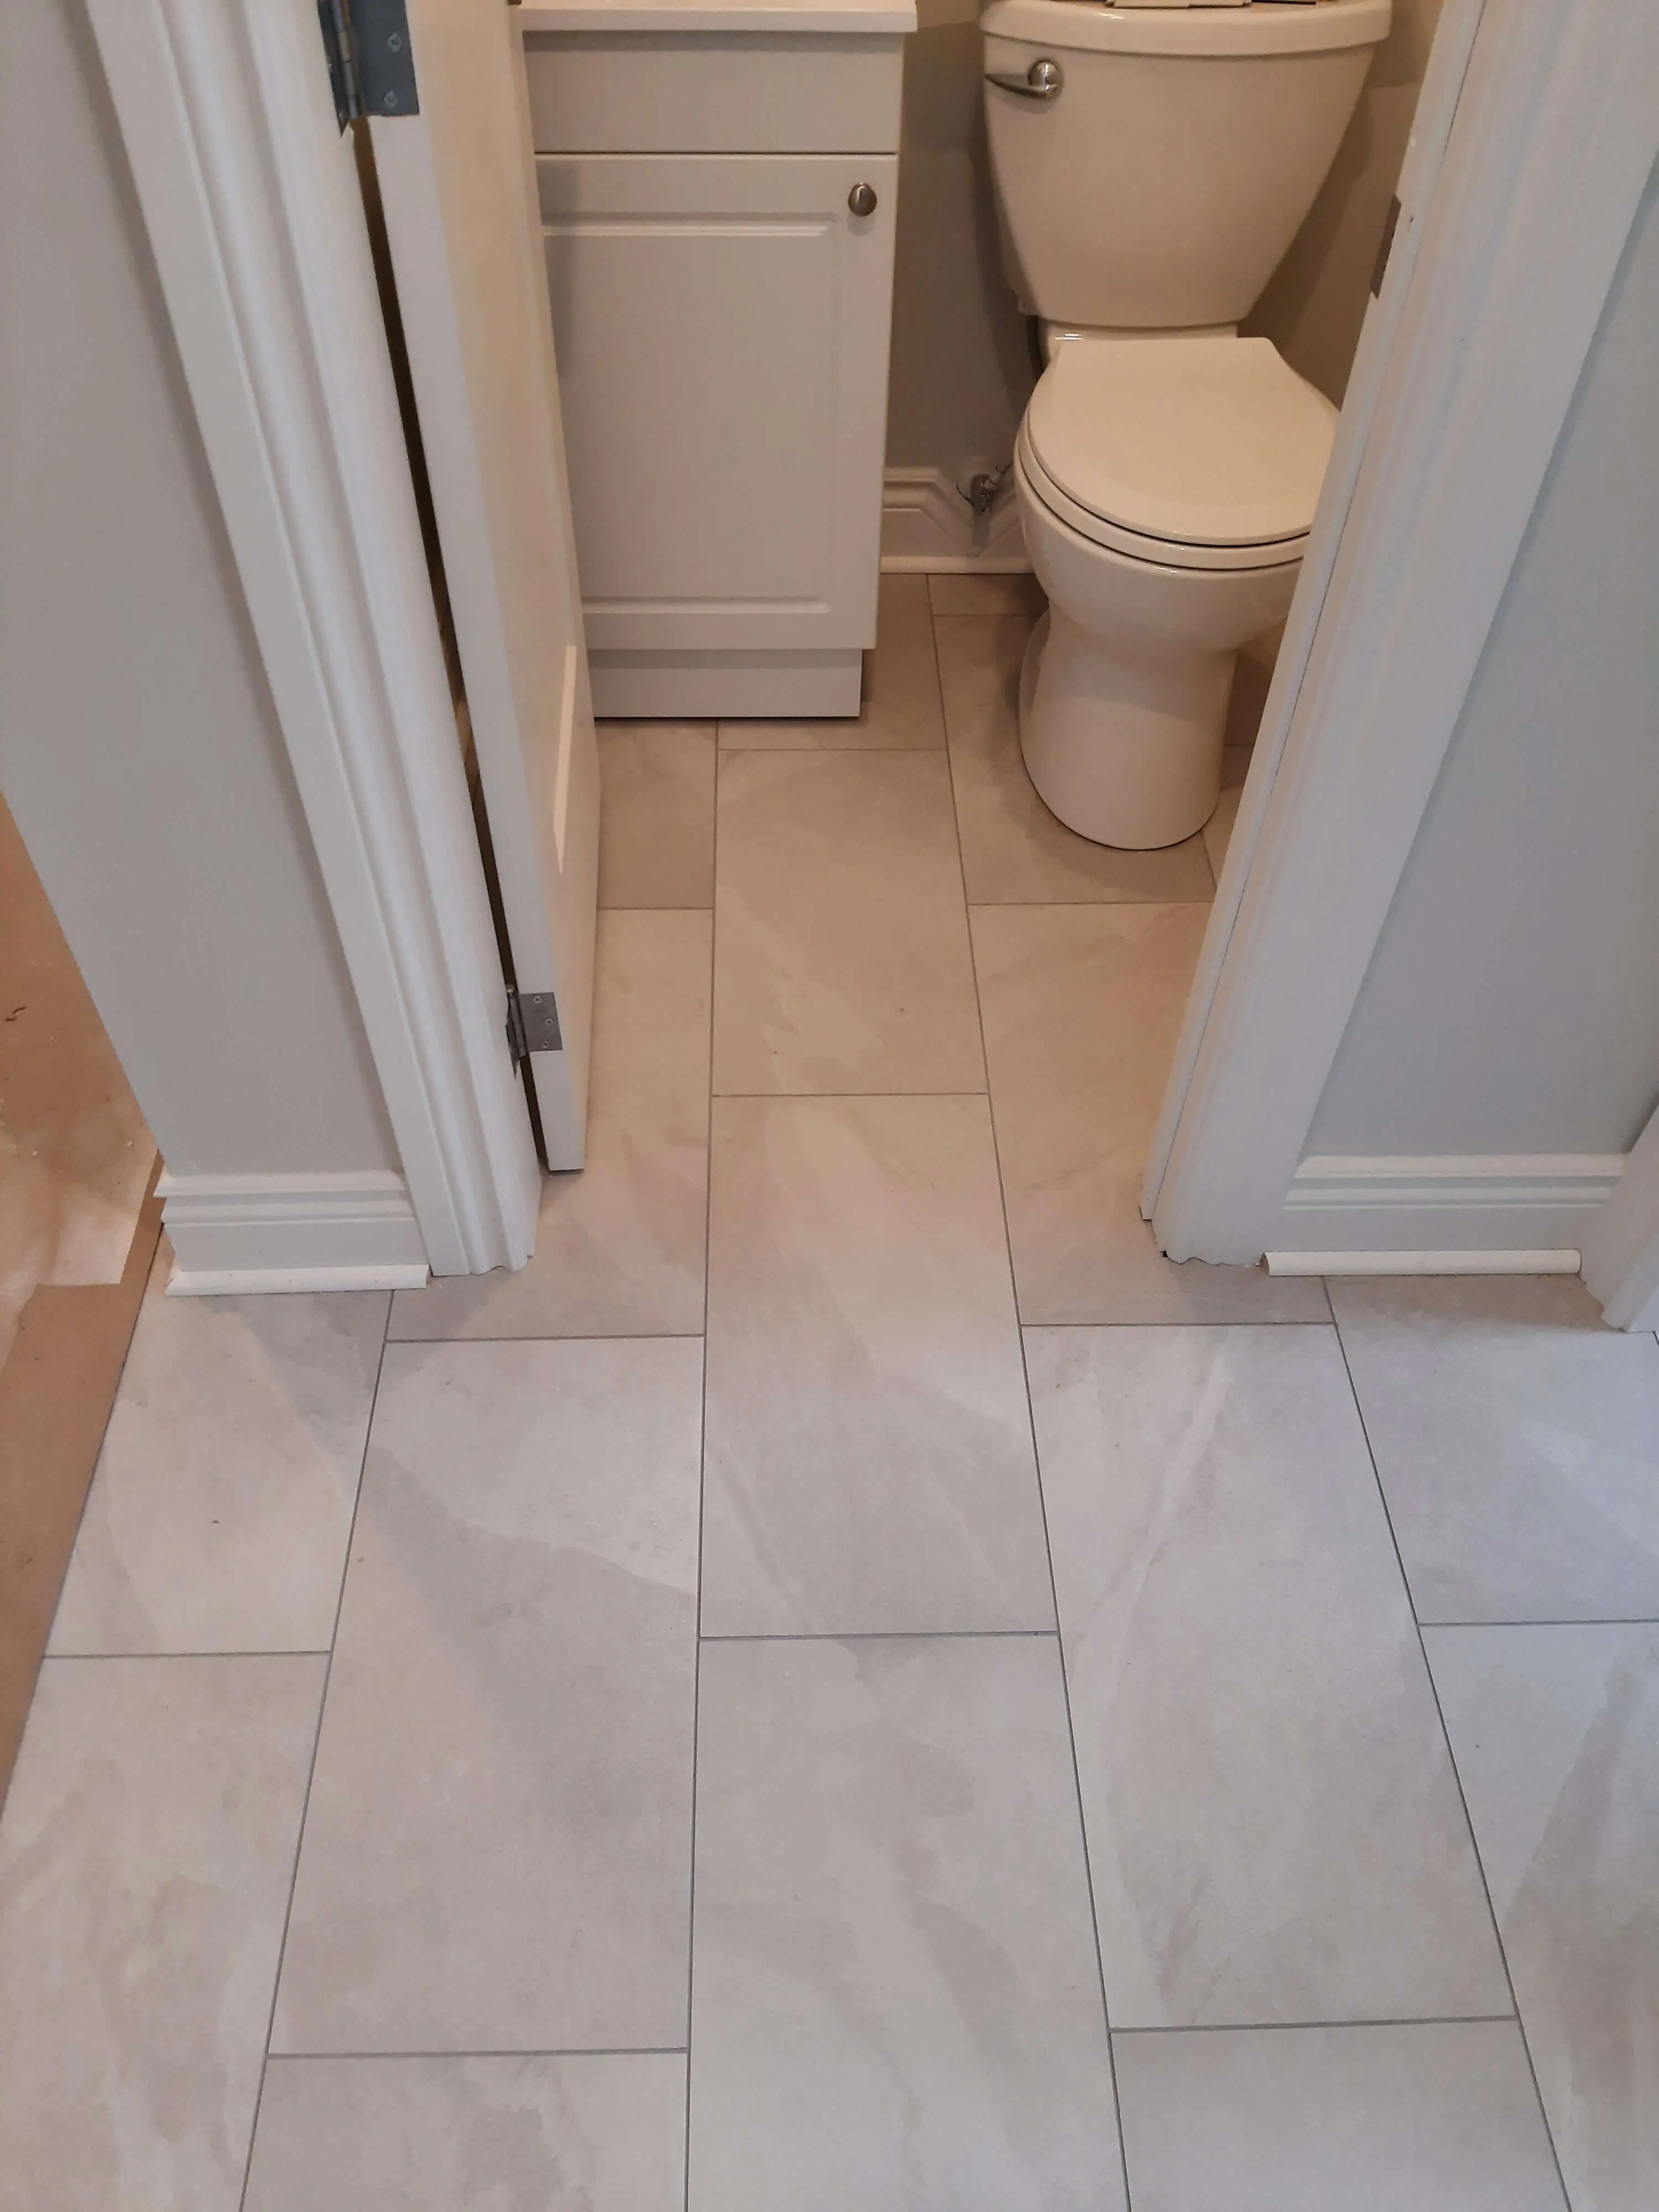 bathroom floor tile